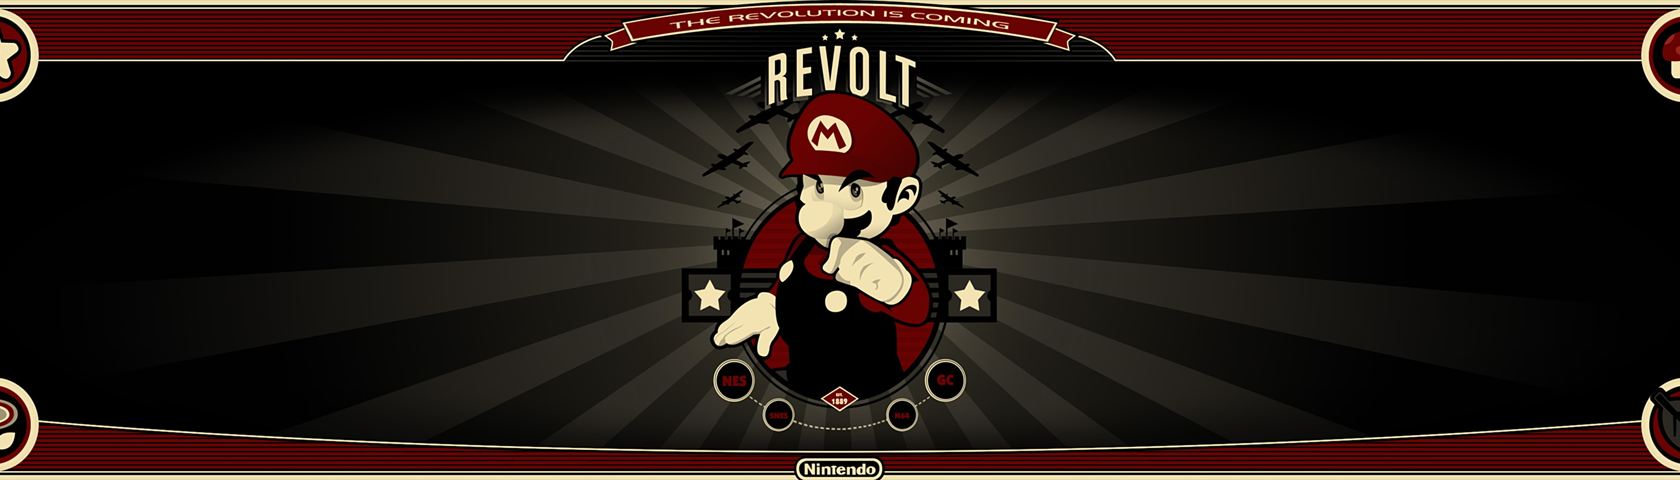 Mario Revolution